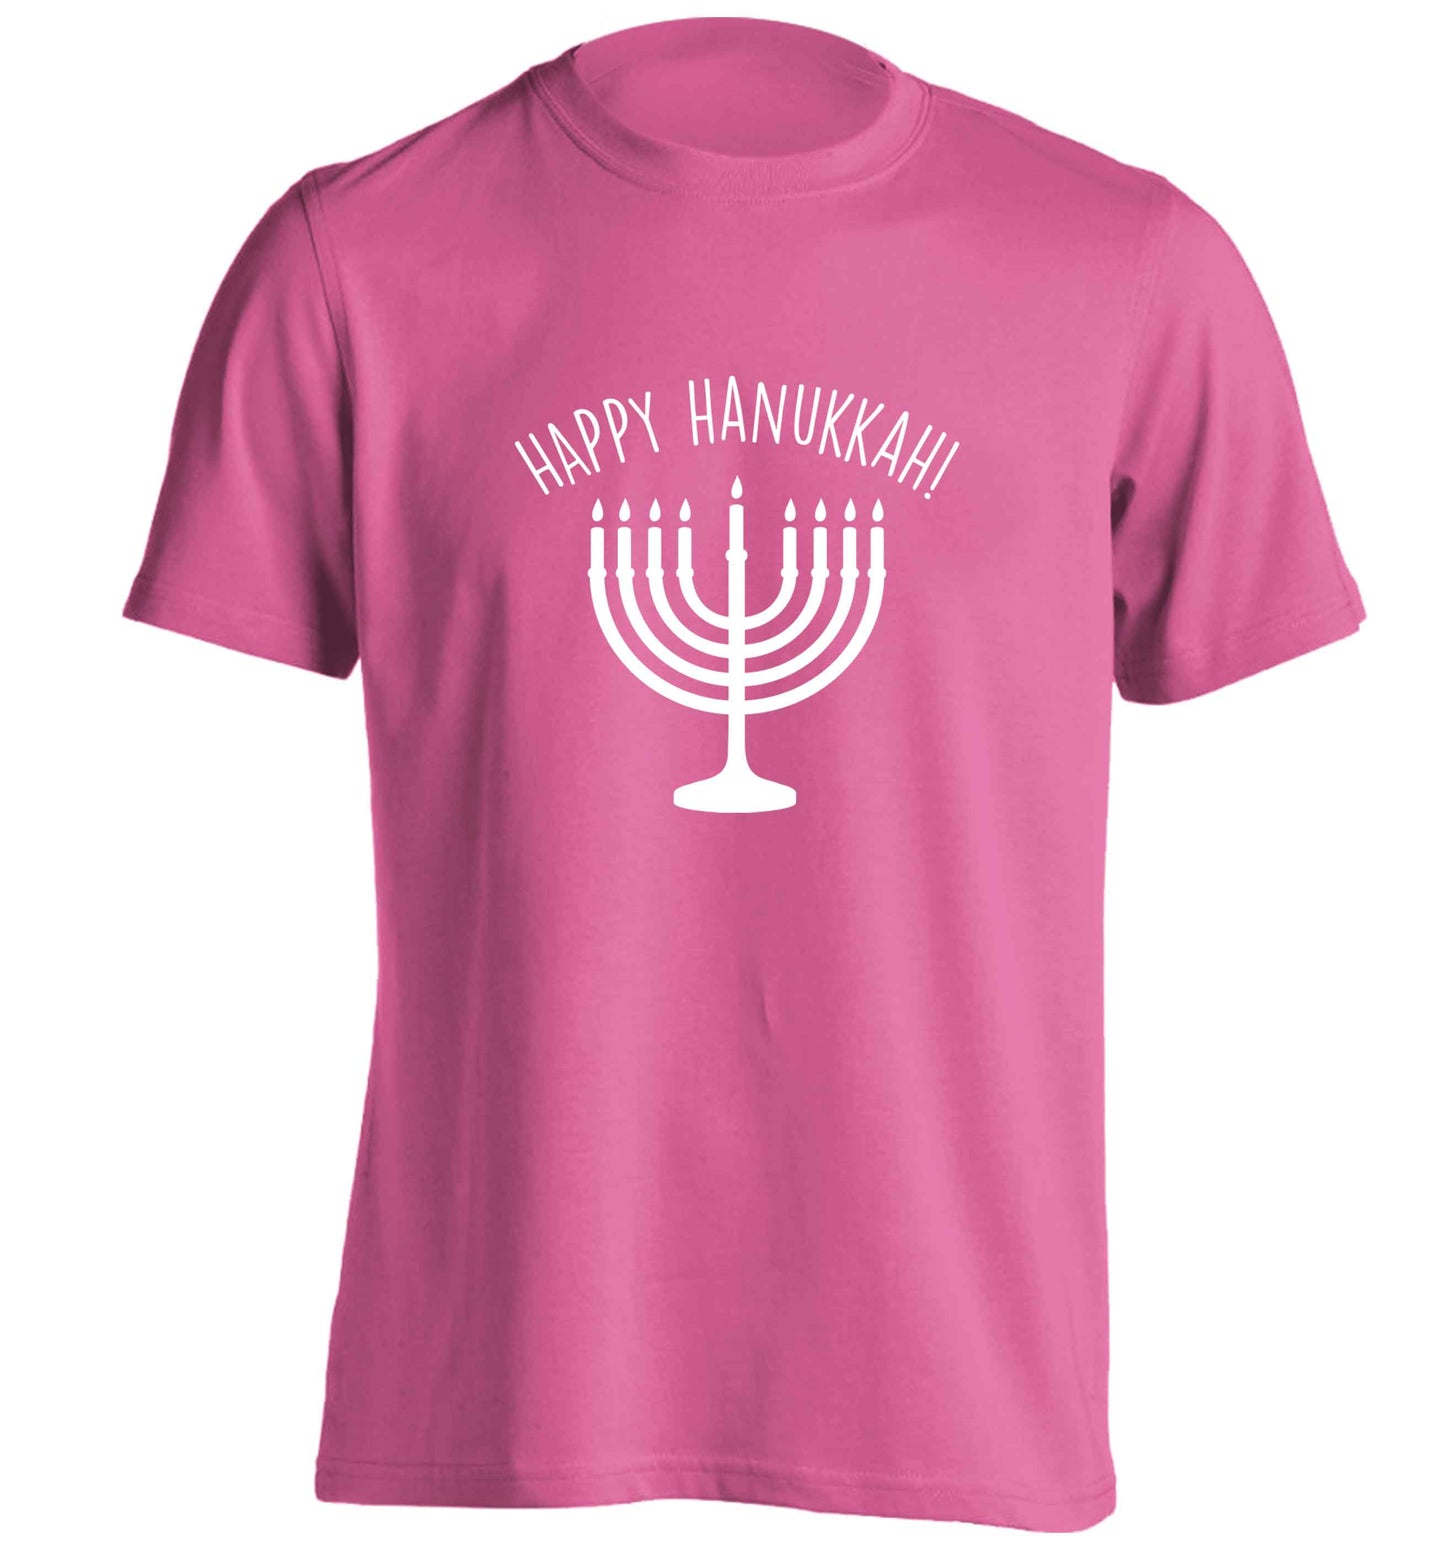 Happy hanukkah adults unisex pink Tshirt 2XL